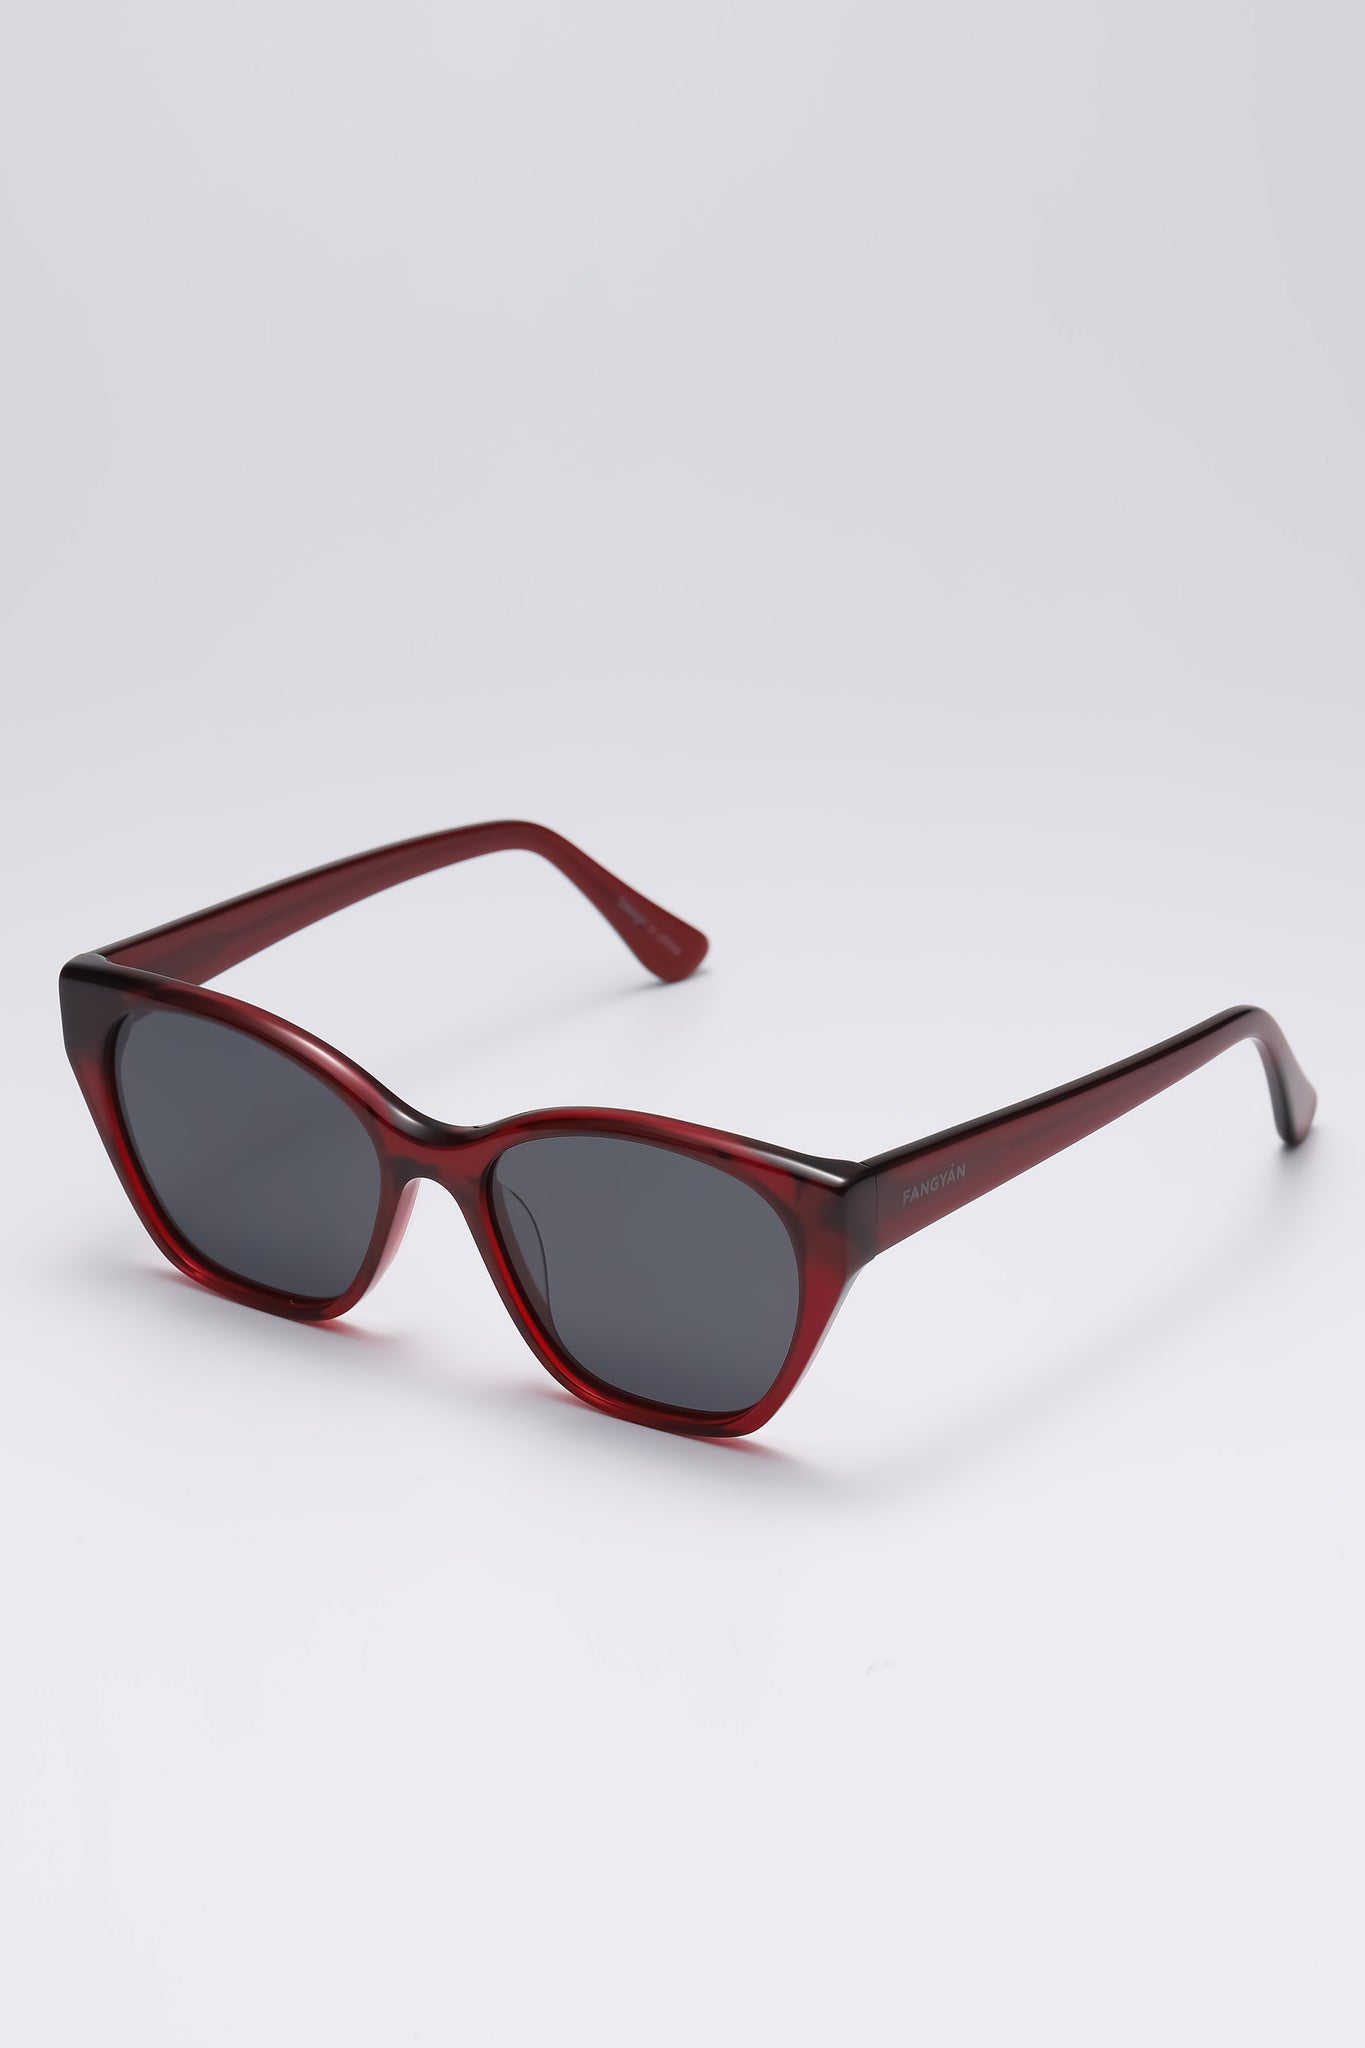 Fangyan | Cat-Eye Clear Red Sunglasses